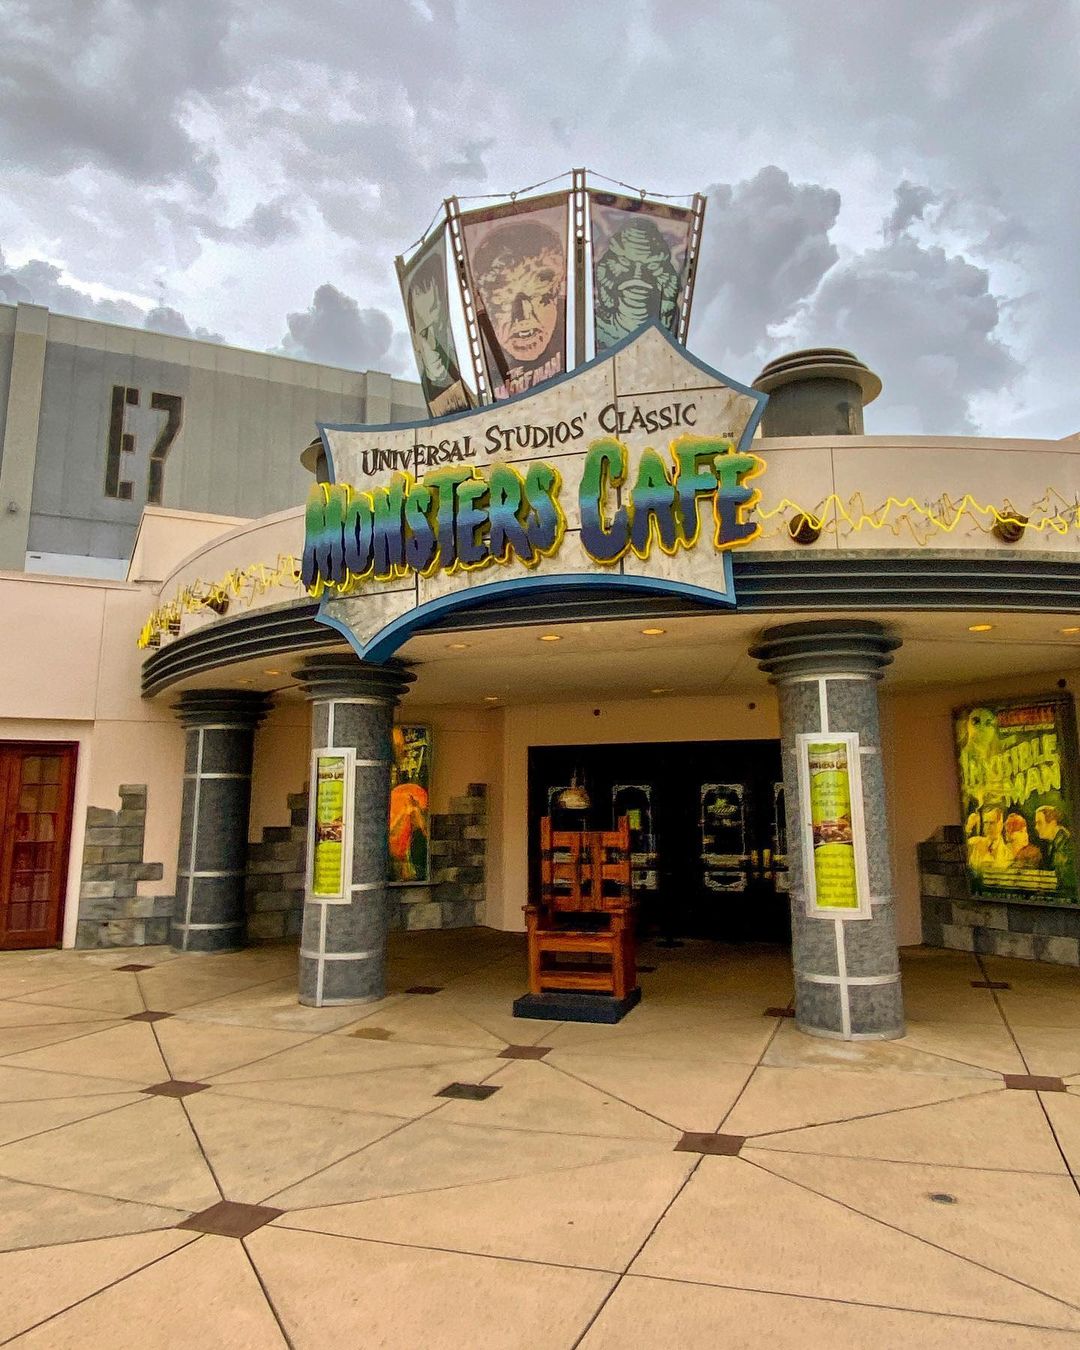 Café des monstres classiques - Restaurant Universal Studios